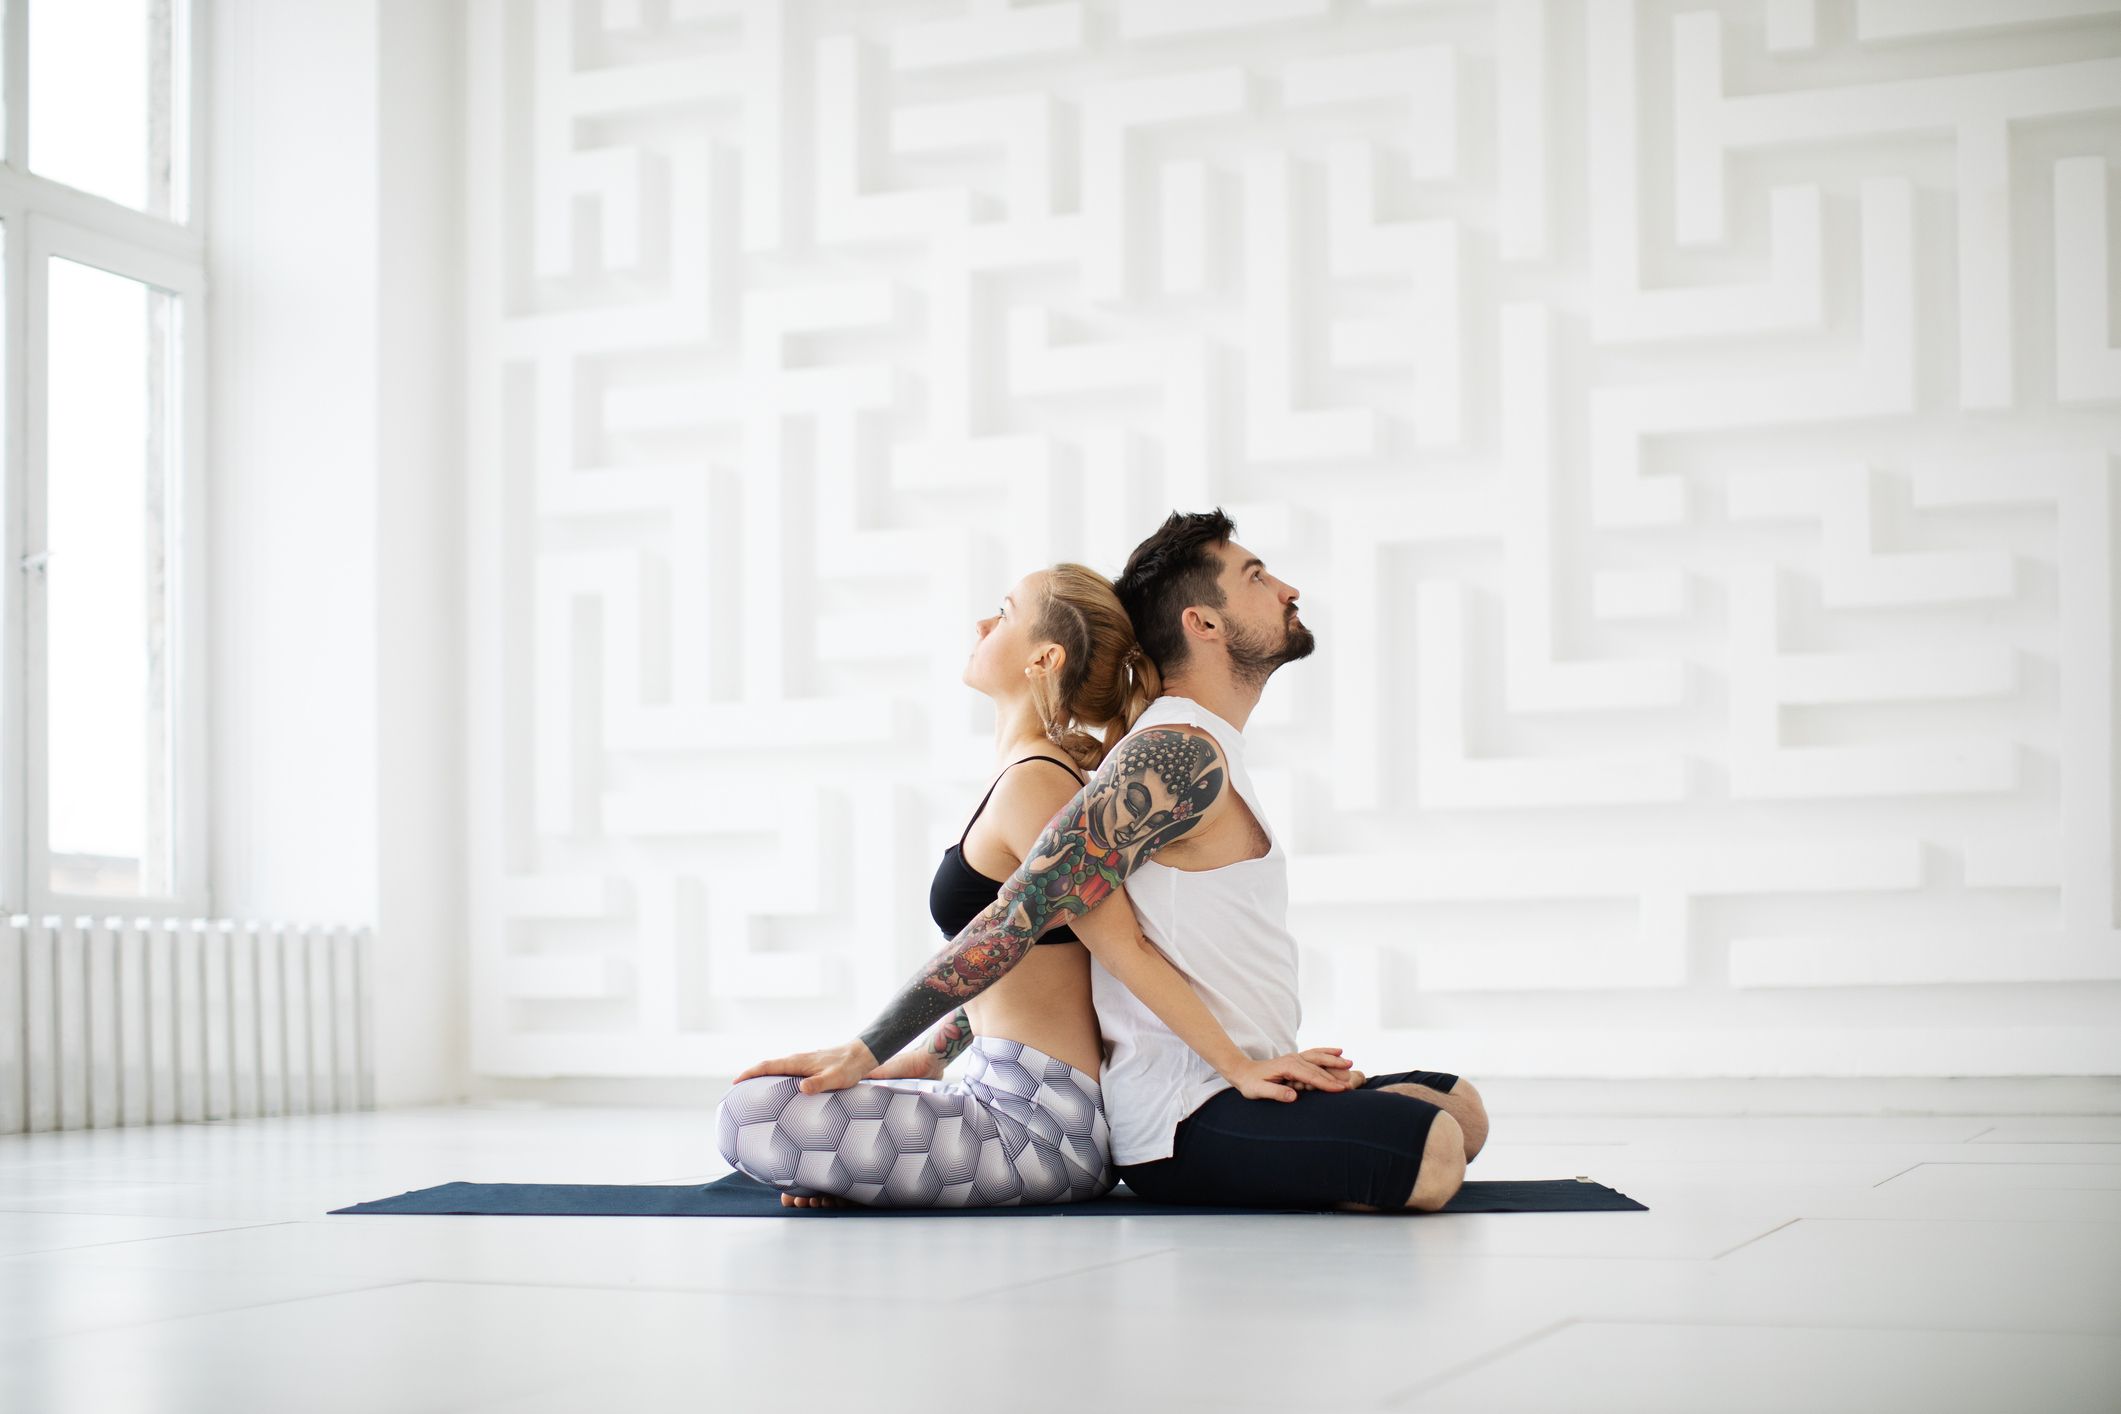 Siblings practicing partner yoga poses at gym - Stock Photo [89105921] -  PIXTA